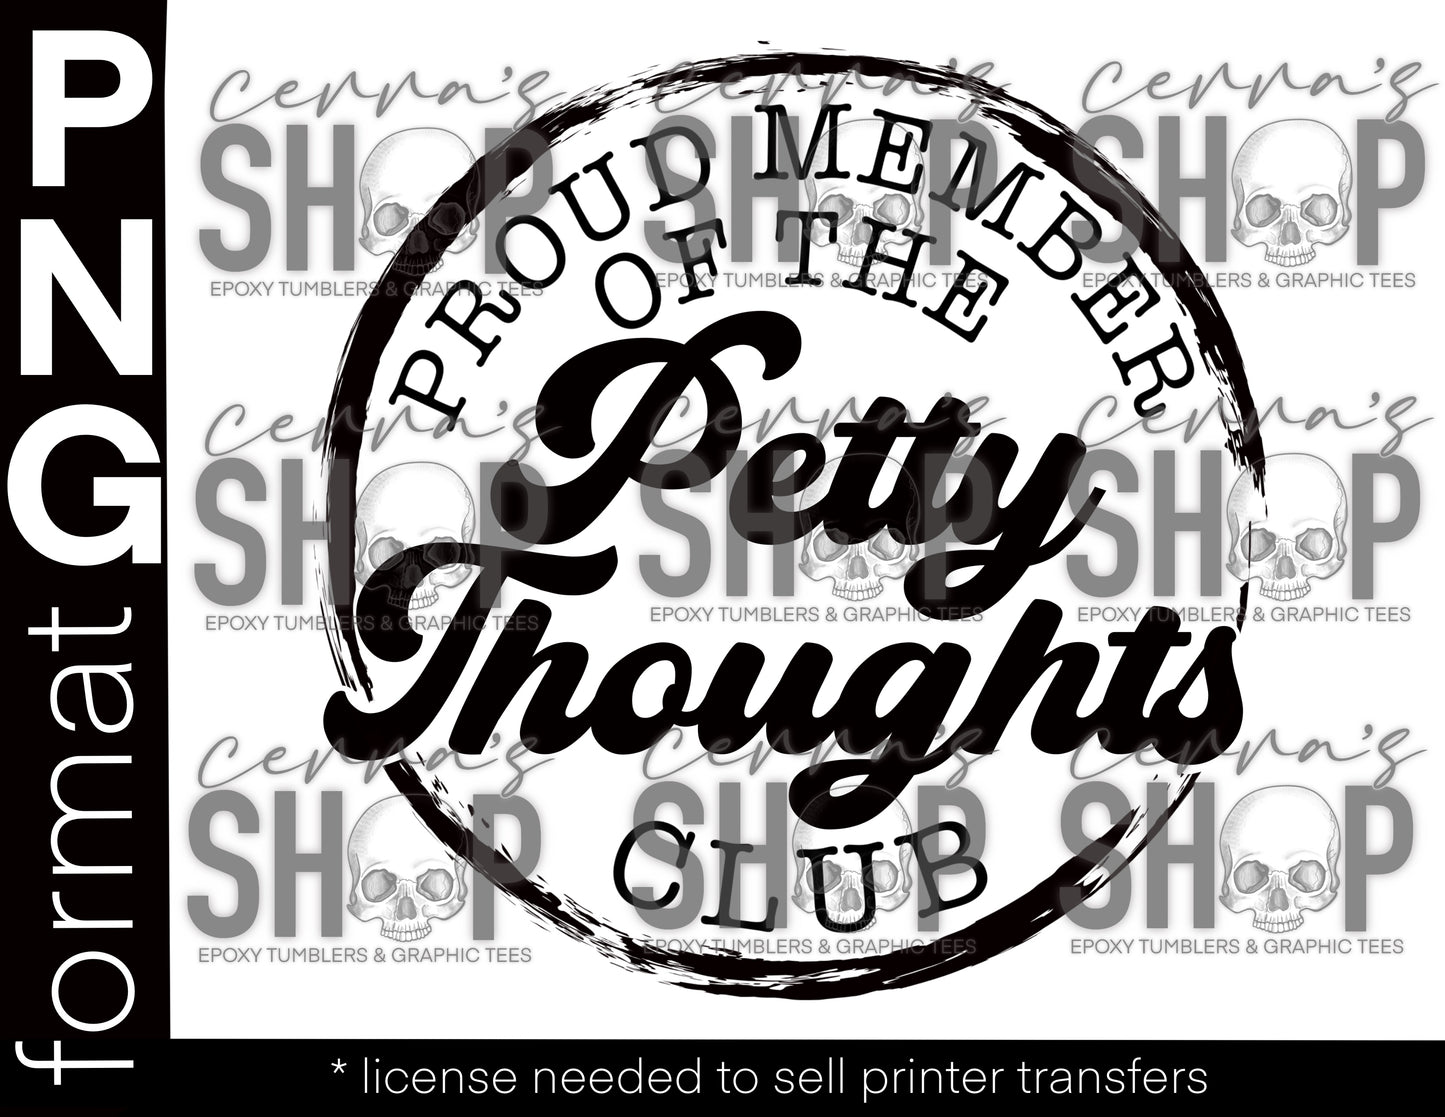 Petty Thoughts club Single Color  Cerra's Shop Creates   